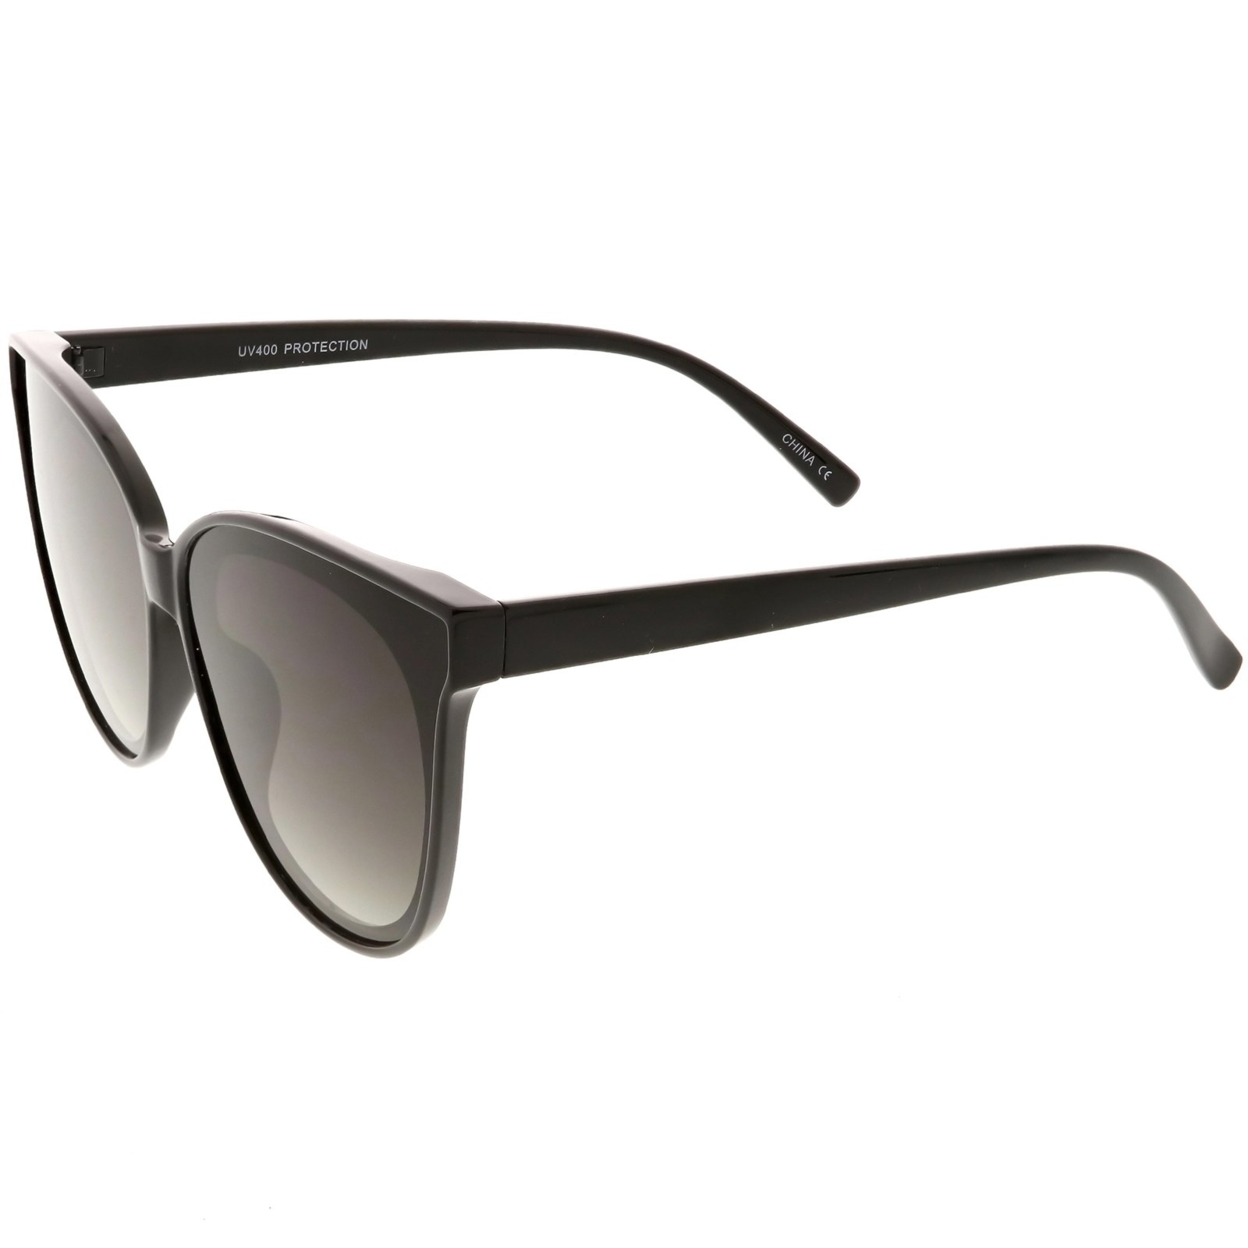 Oversize Cat Eye Sunglasses Neutral Color Flat Lens 60mm - Black White / Smoke